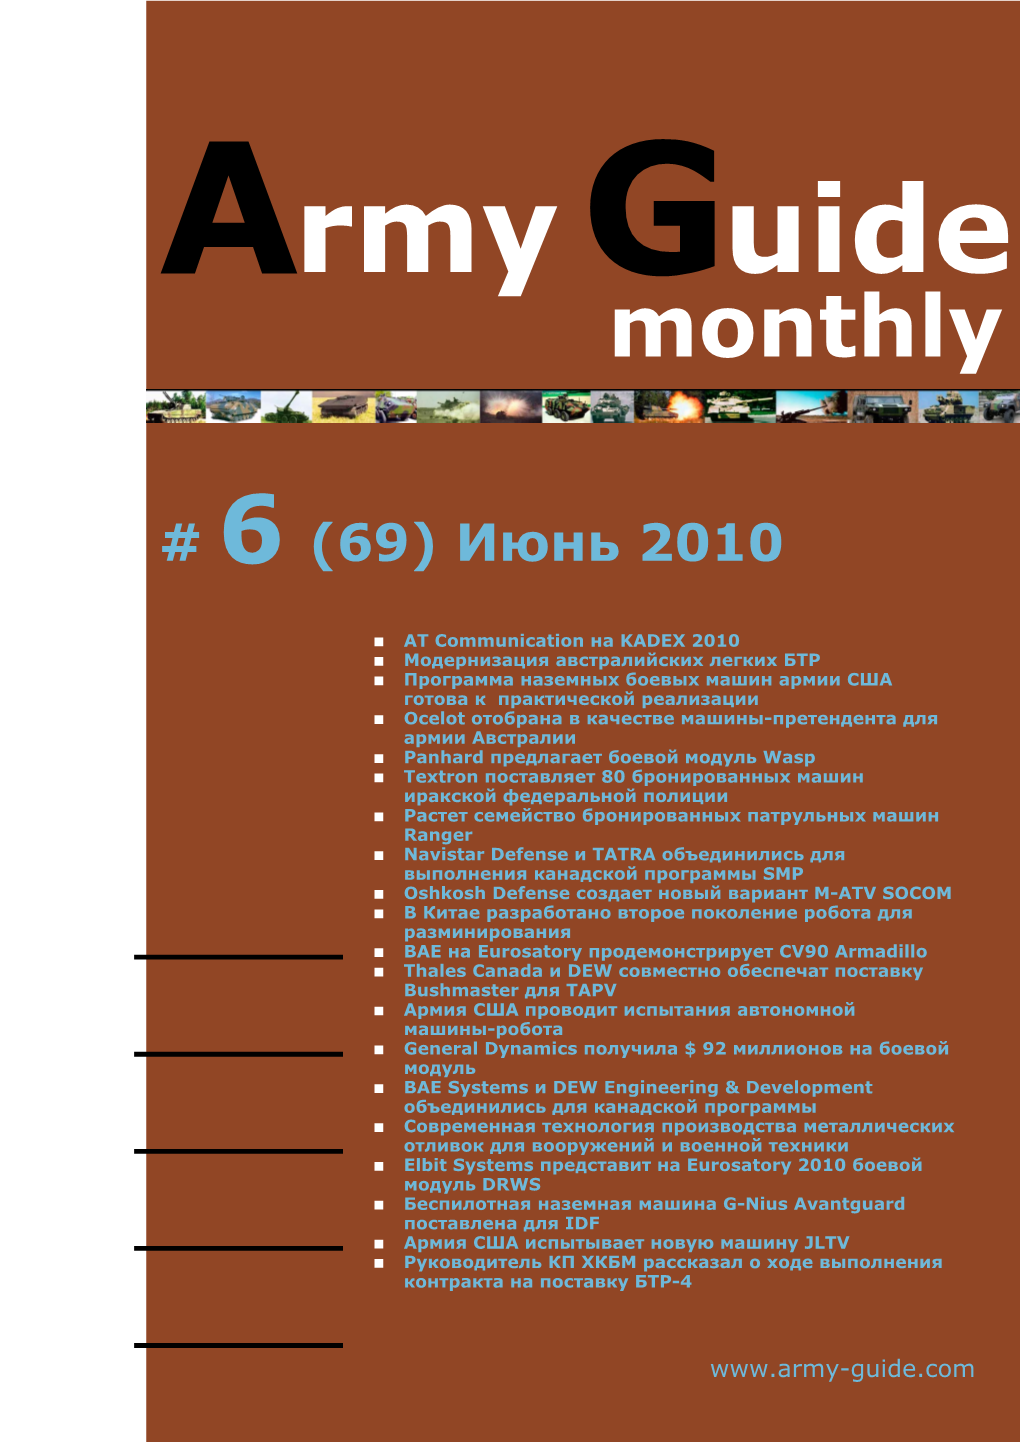 Army Guide Monthly • Выпуск #6 (69) • Июнь 2010